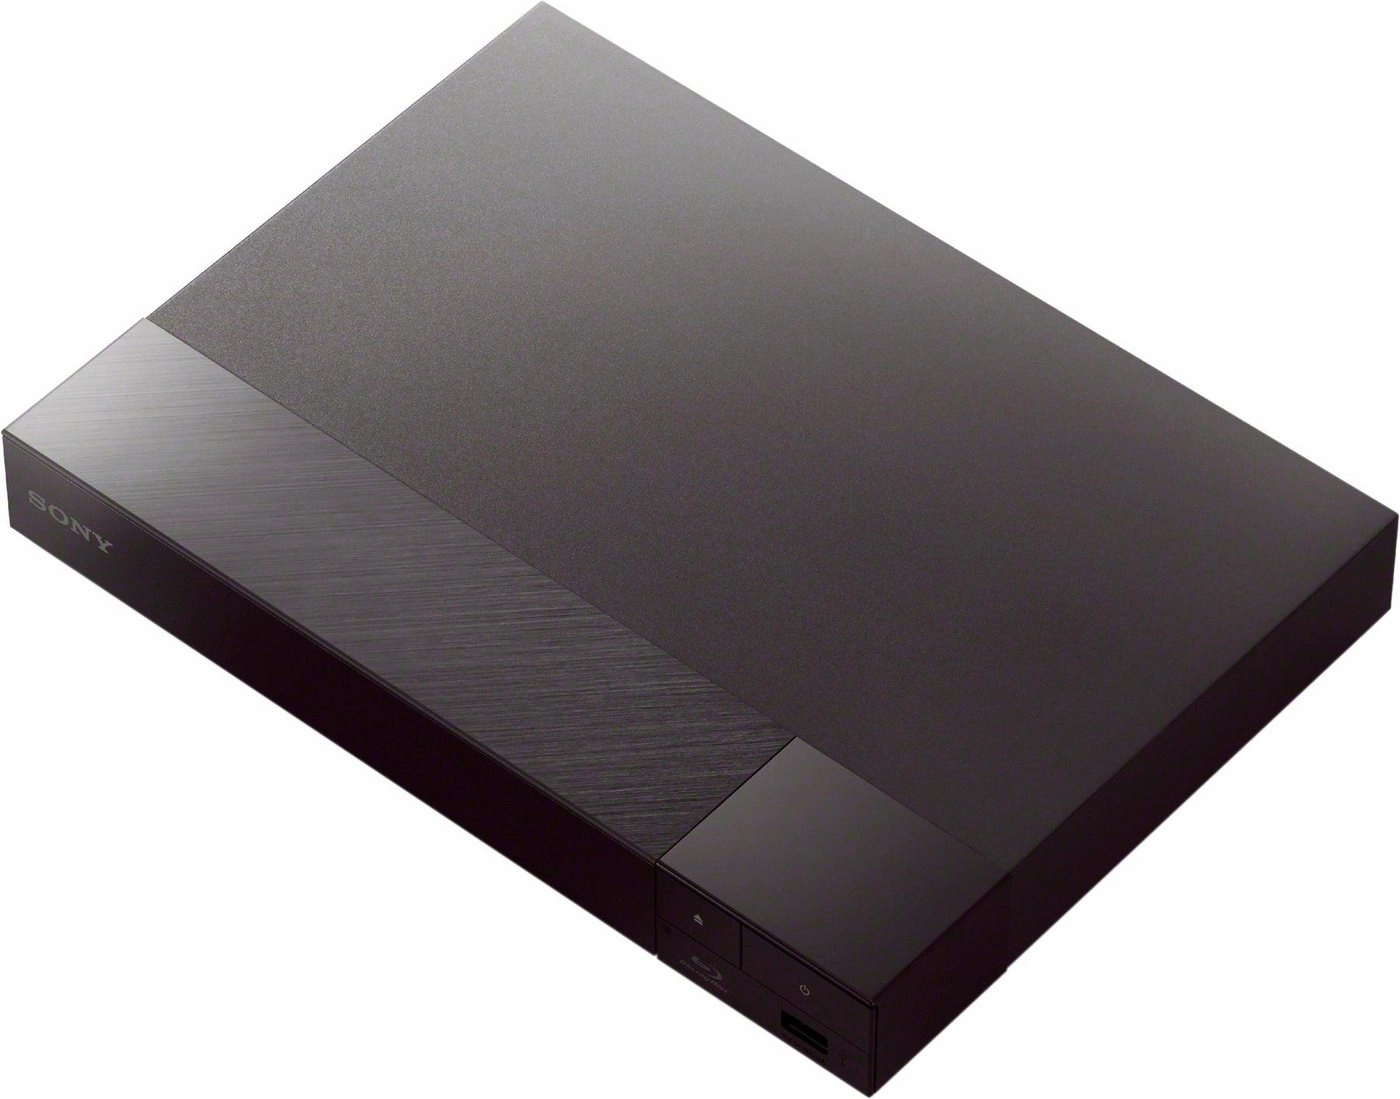 BDP-S6700B, Blu-ray-Player